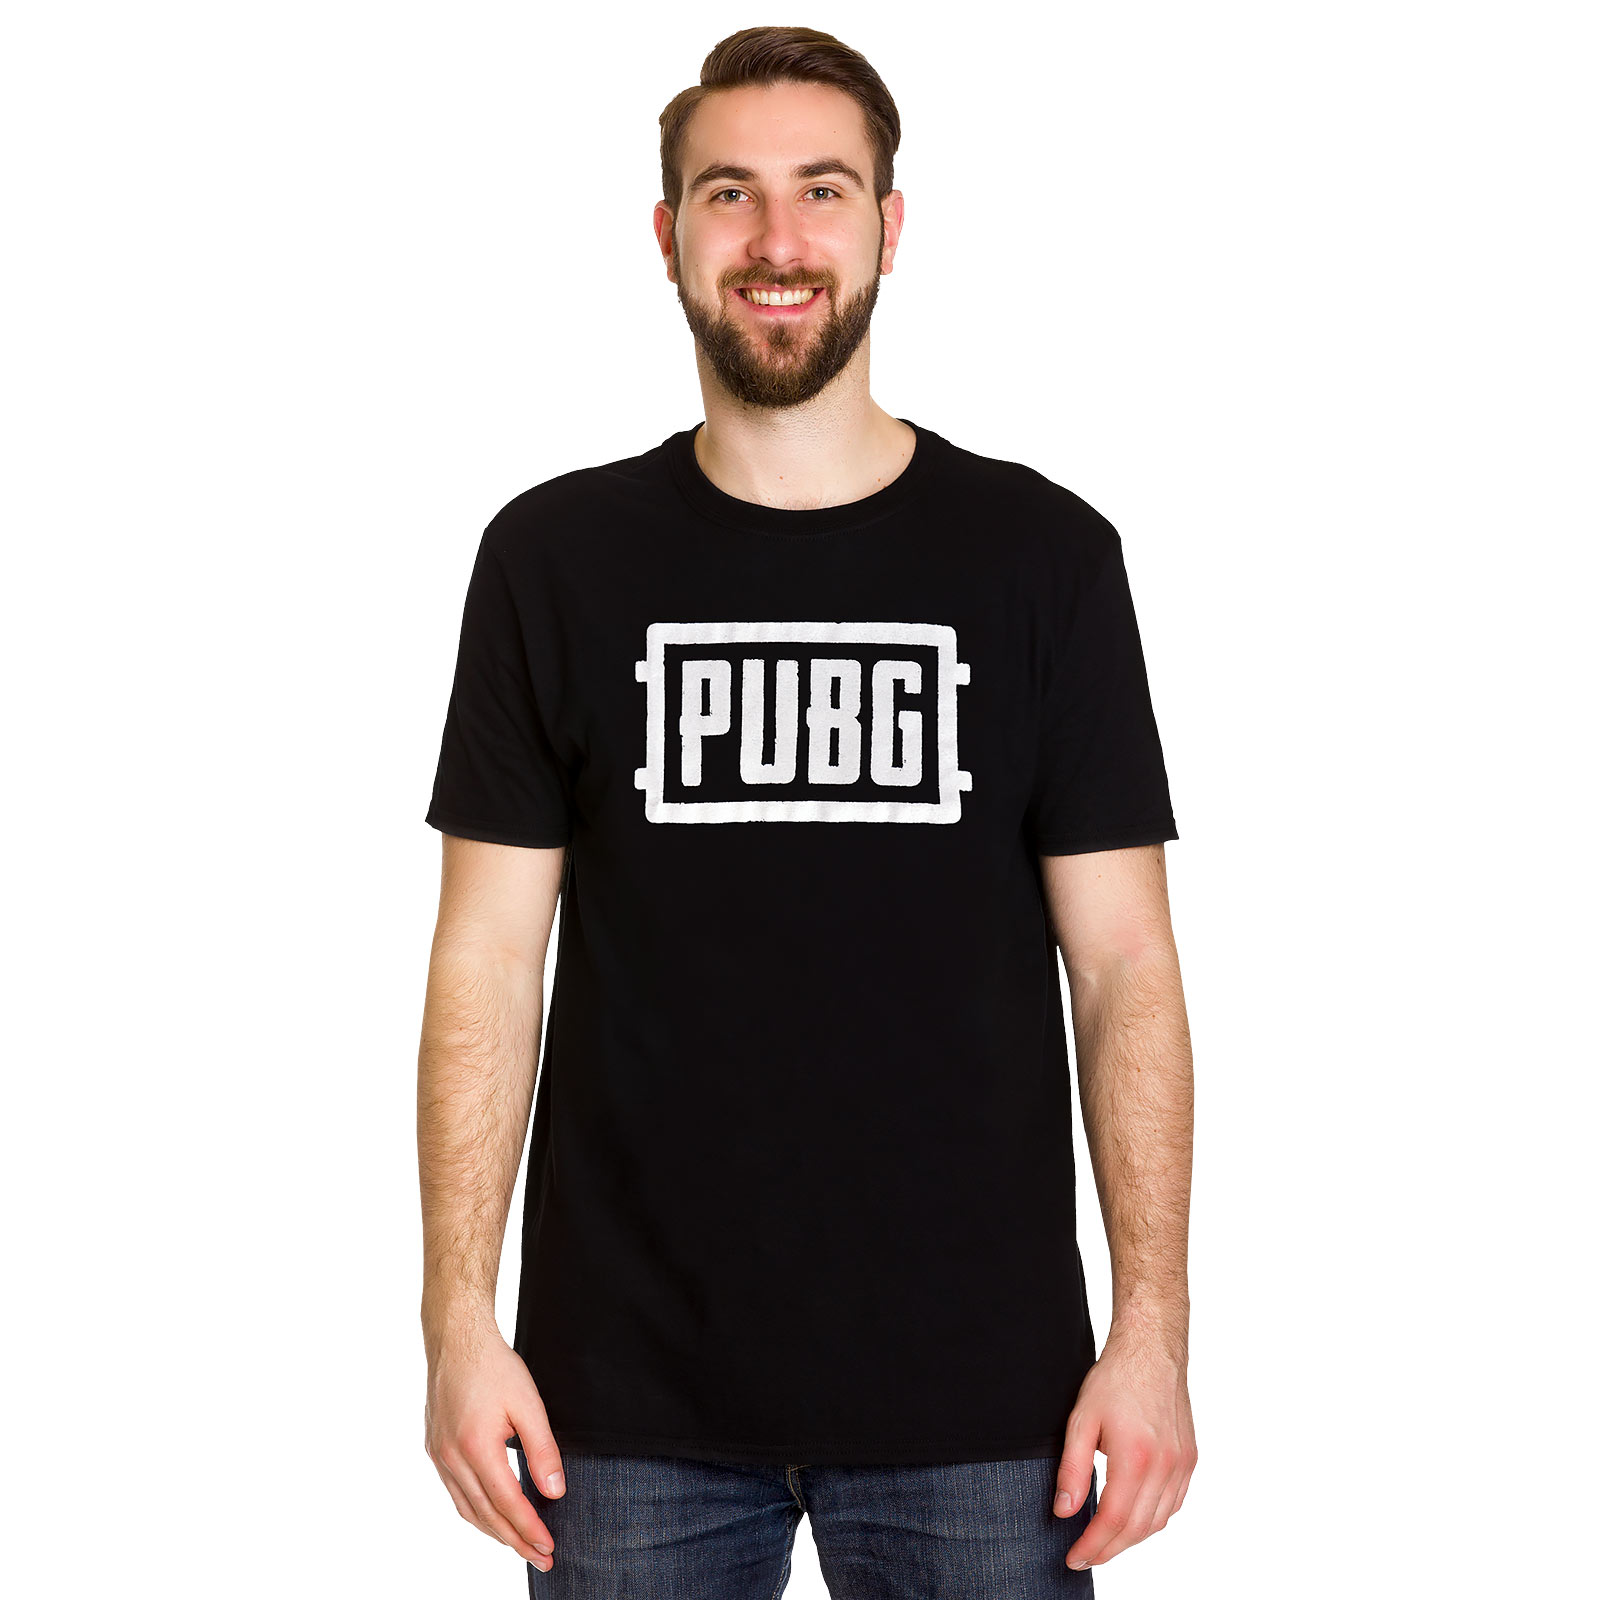 PUBG - T-shirt noir avec logo blanc